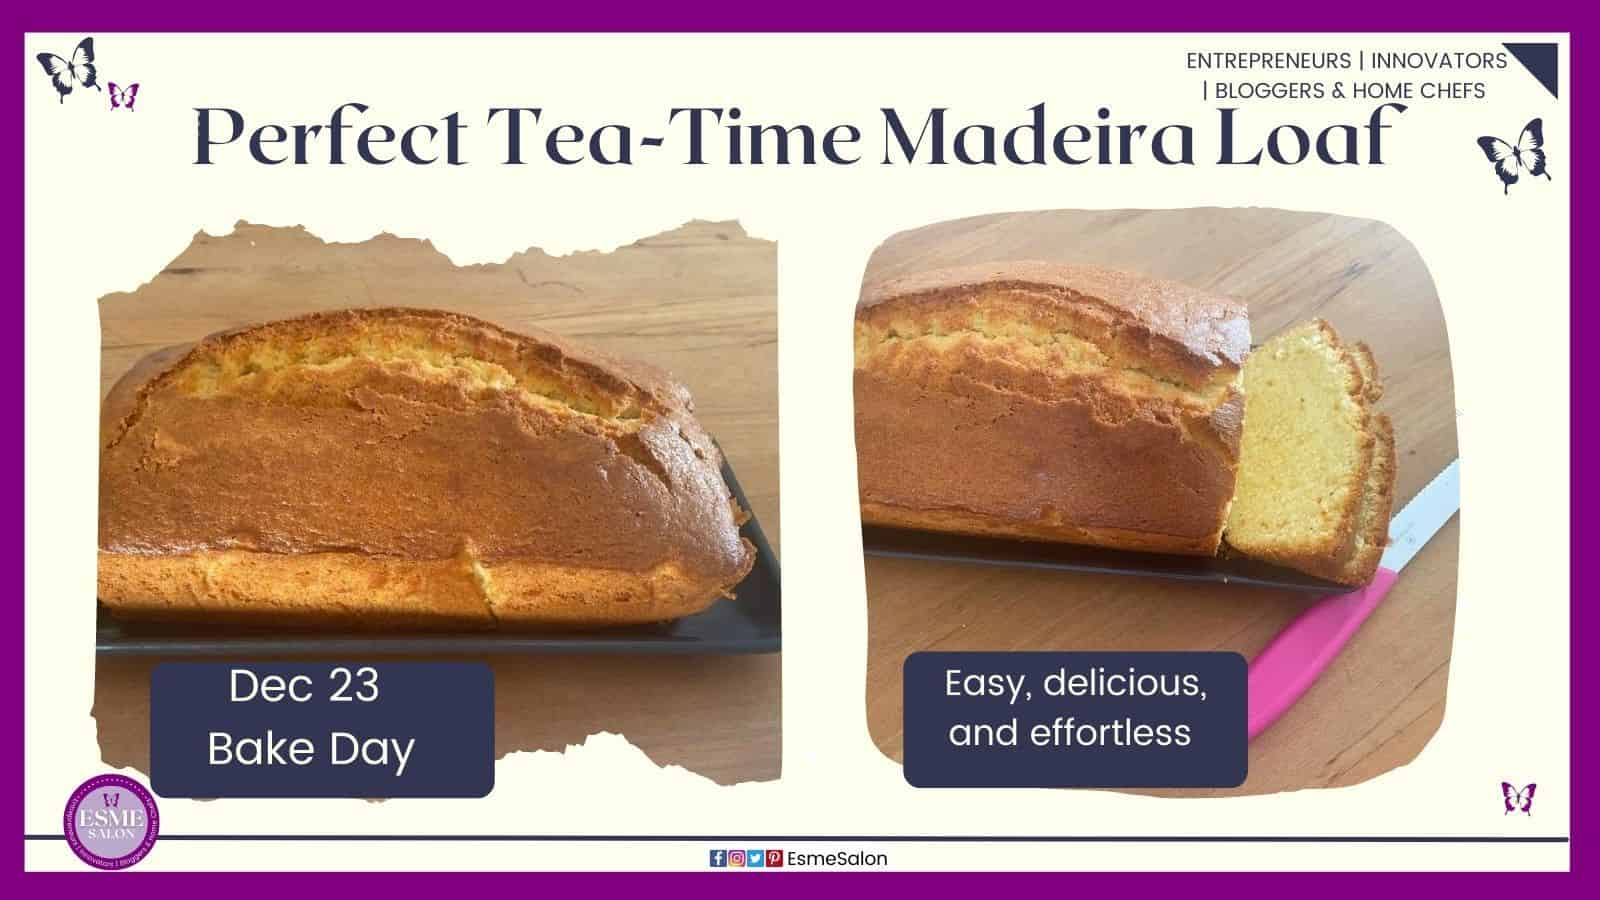 an image of a Tea-Time Madeira Loaf